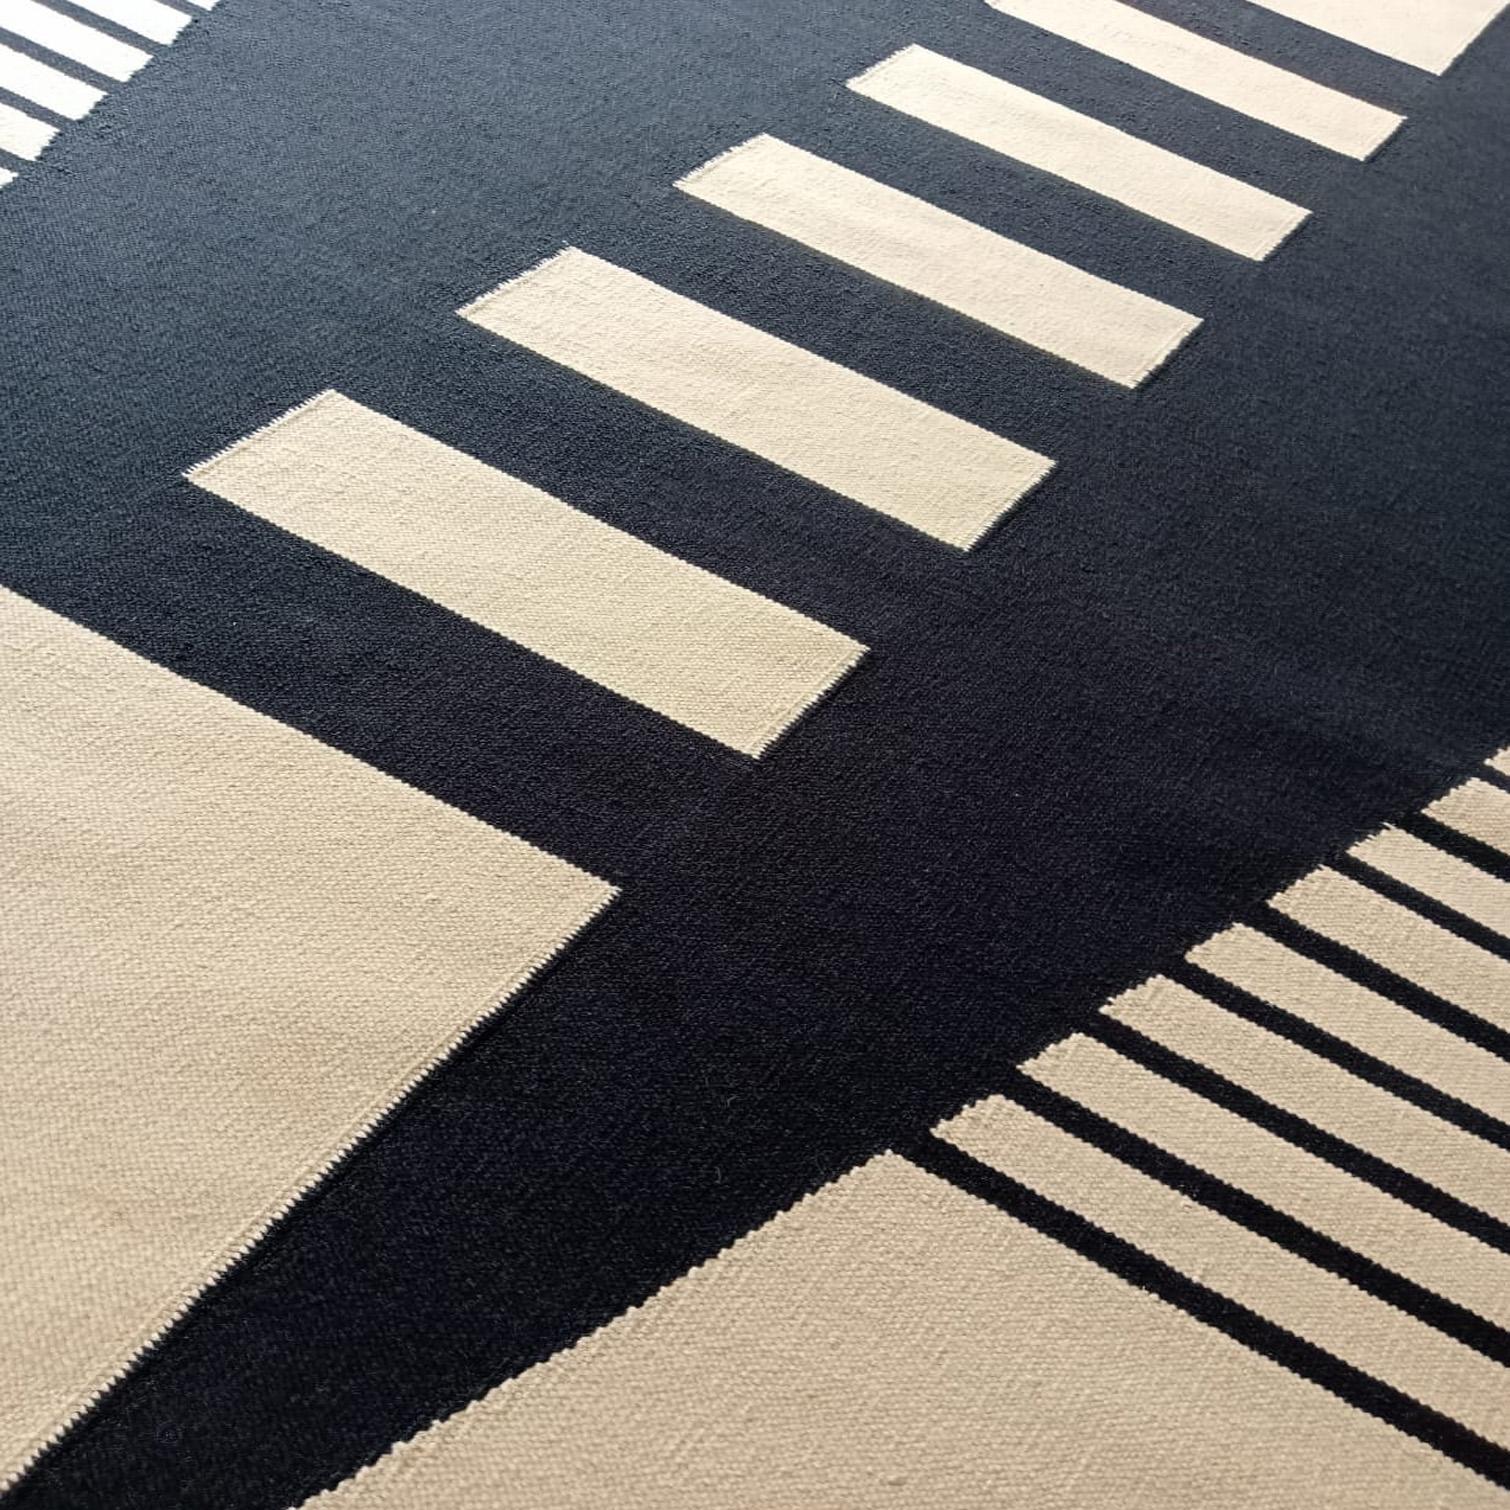 Indian Dhurrie rug - Wool Modern Geometric Neutral Black Grey Cream Beige Lines Stripes For Sale